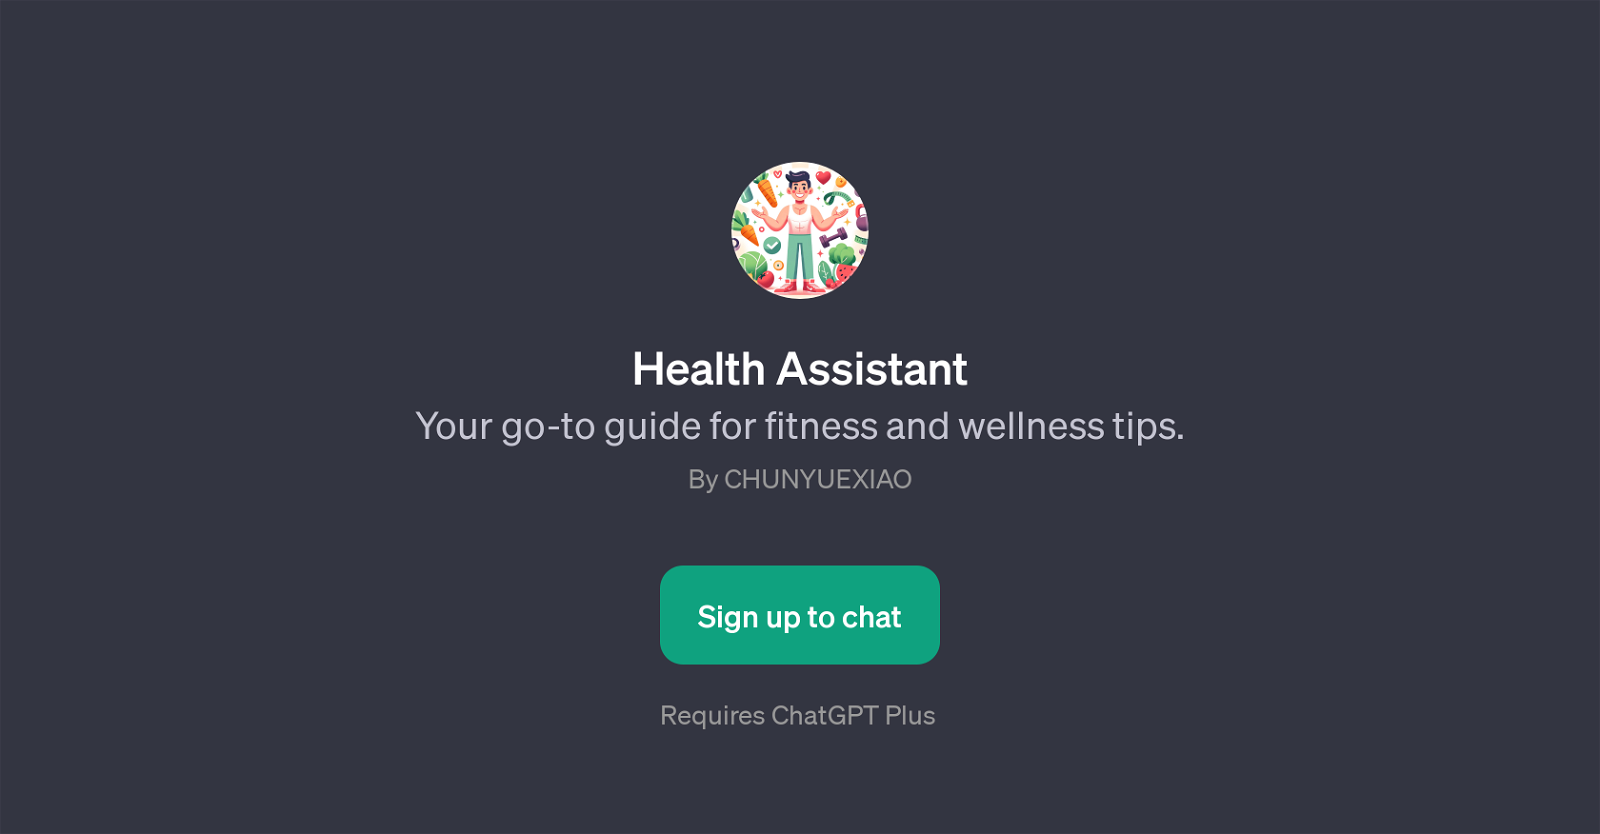 Health Assistant website